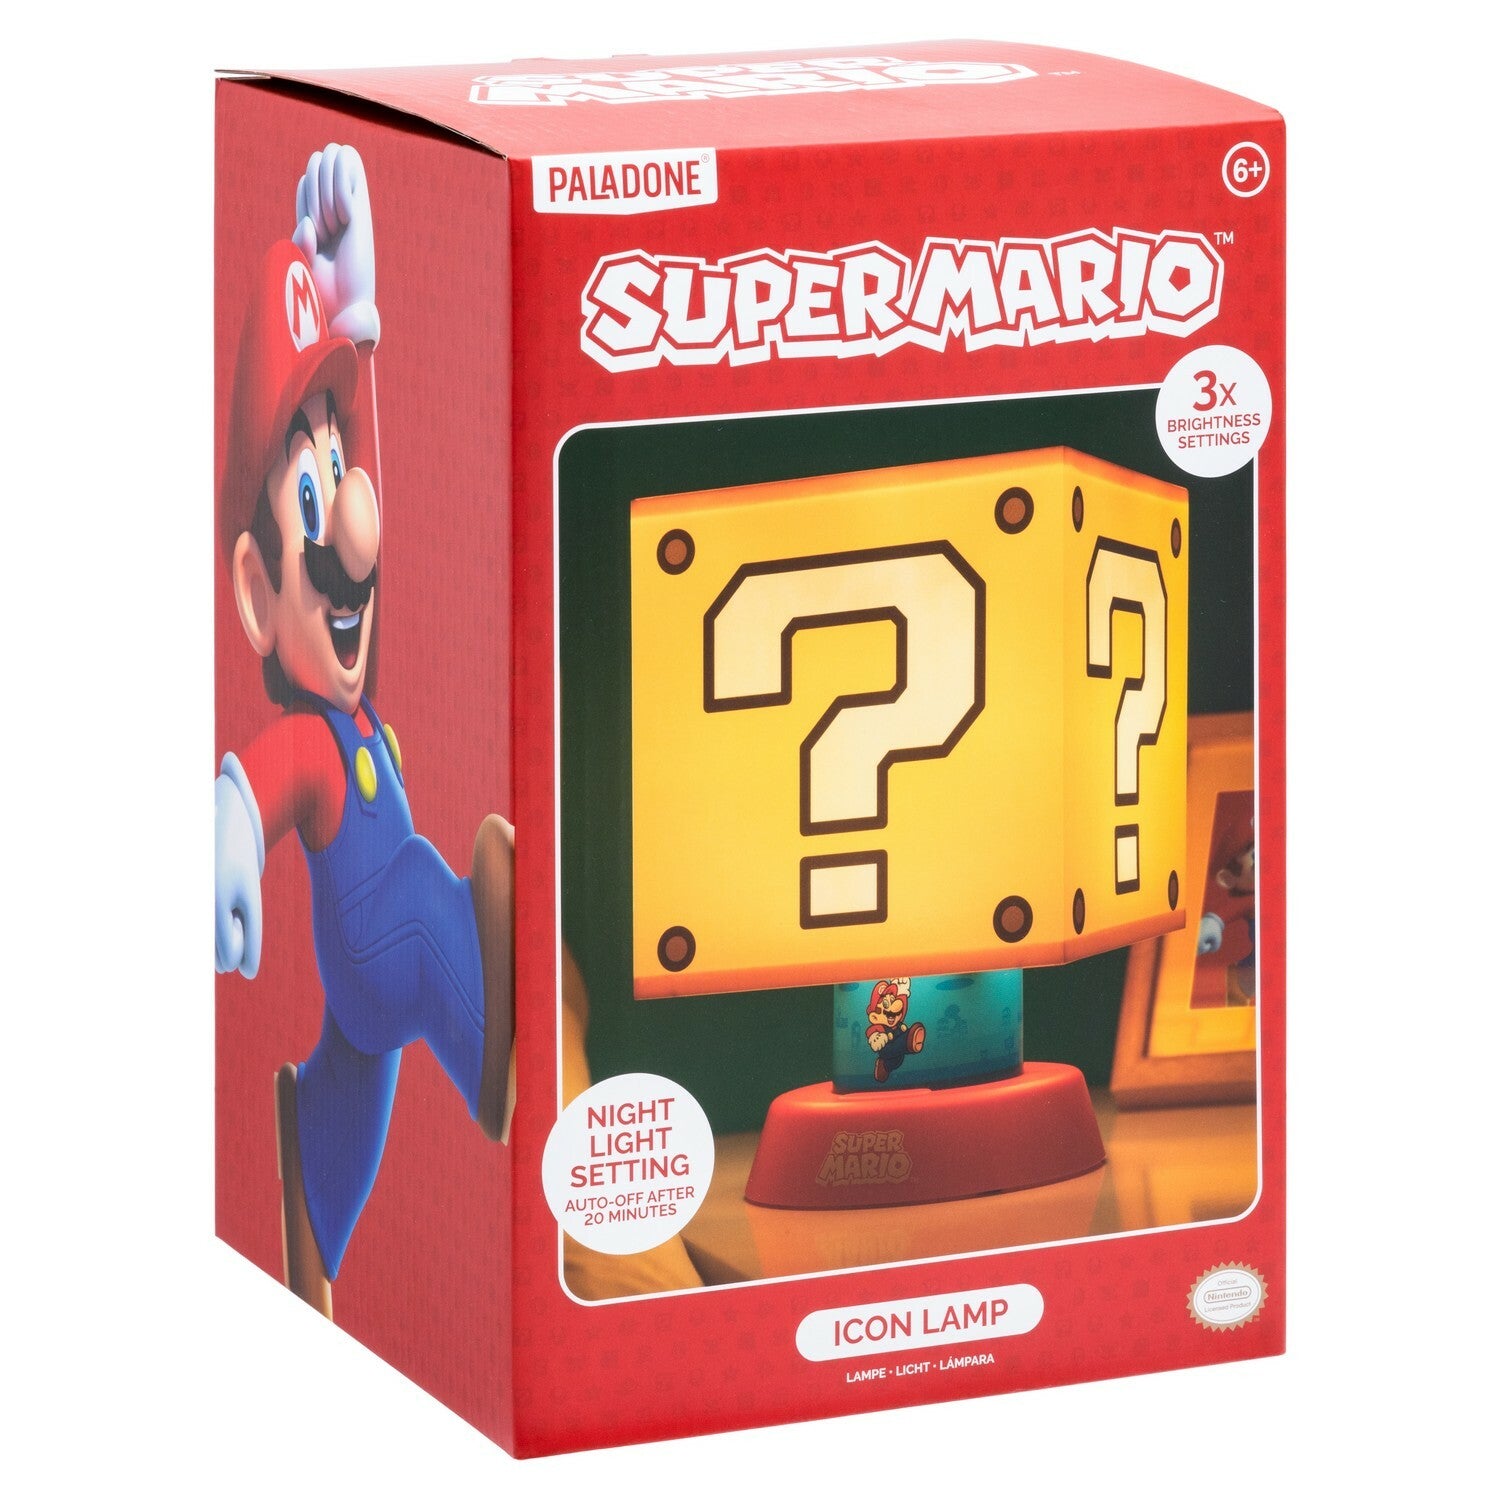  Super Mario: Icon Lamp  5055964781873